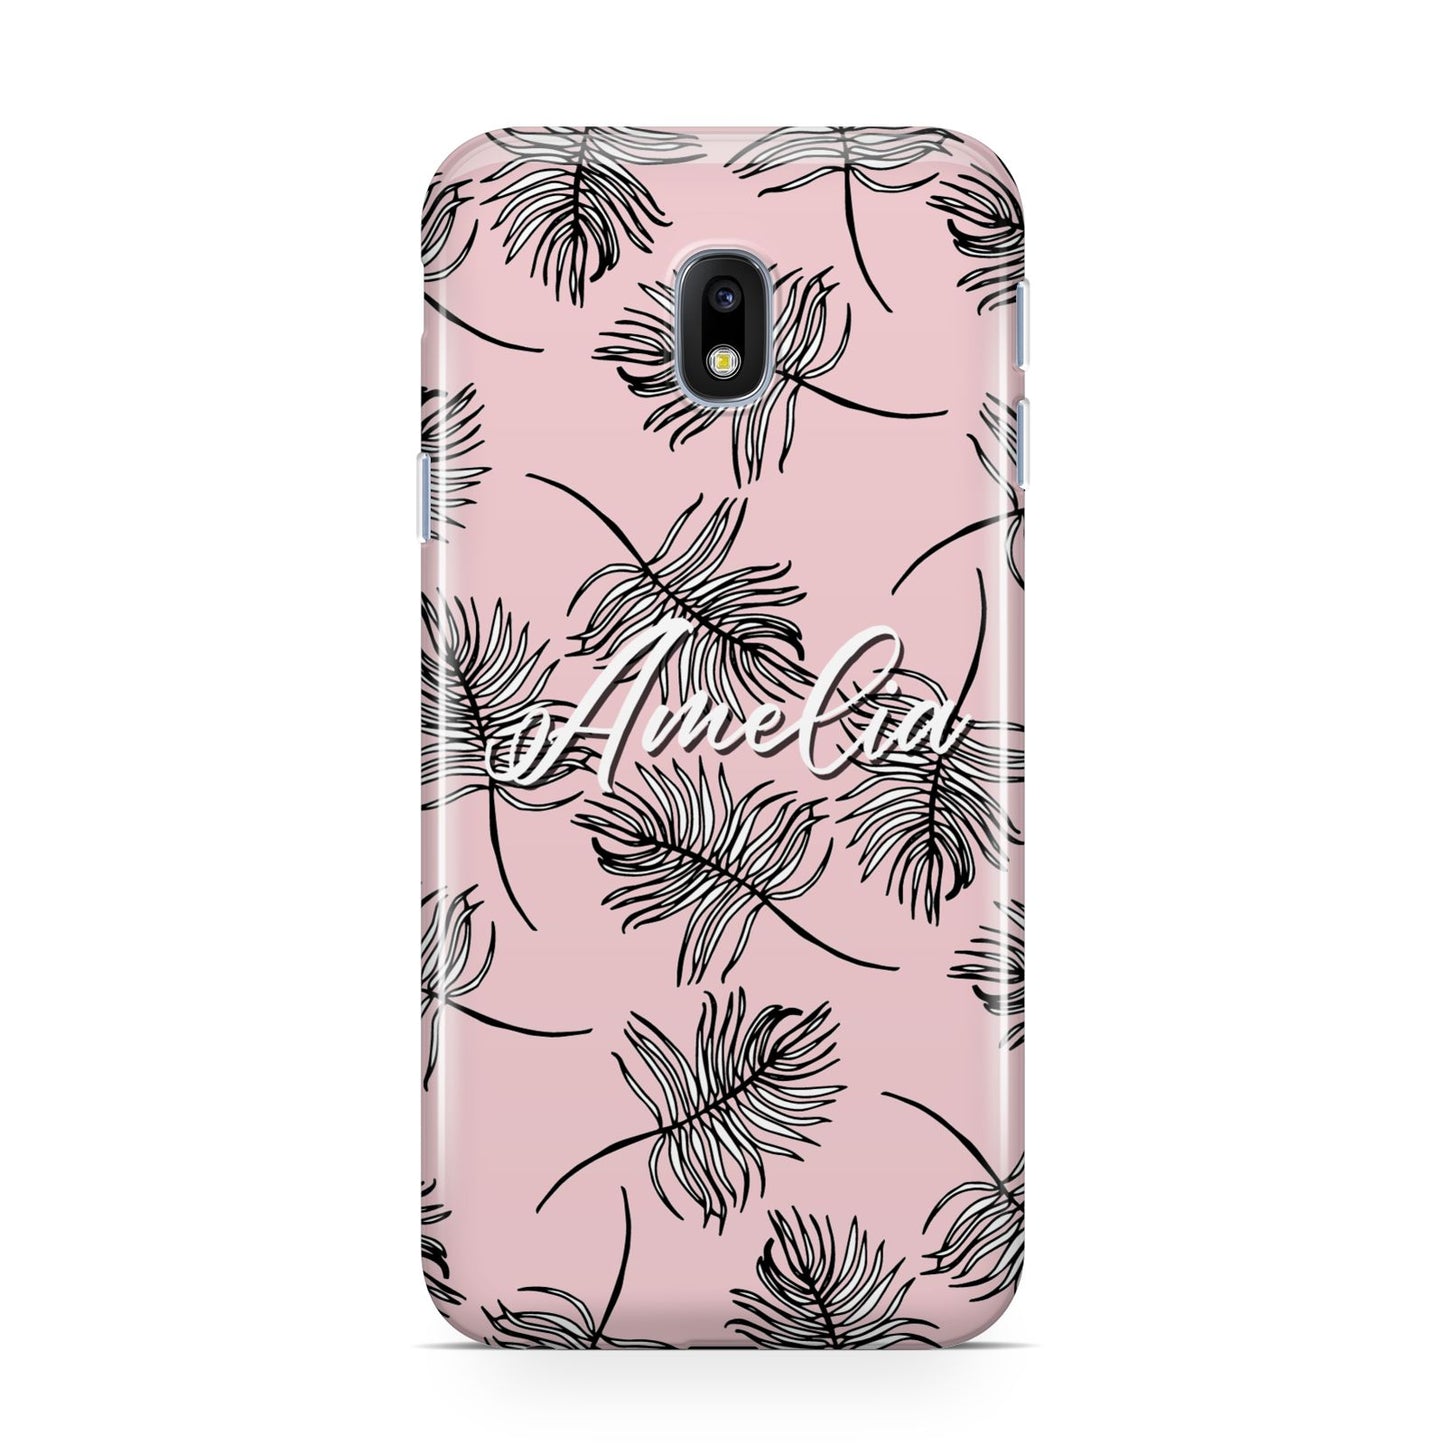 Personalised Pink Monochrome Tropical Leaf Samsung Galaxy J3 2017 Case